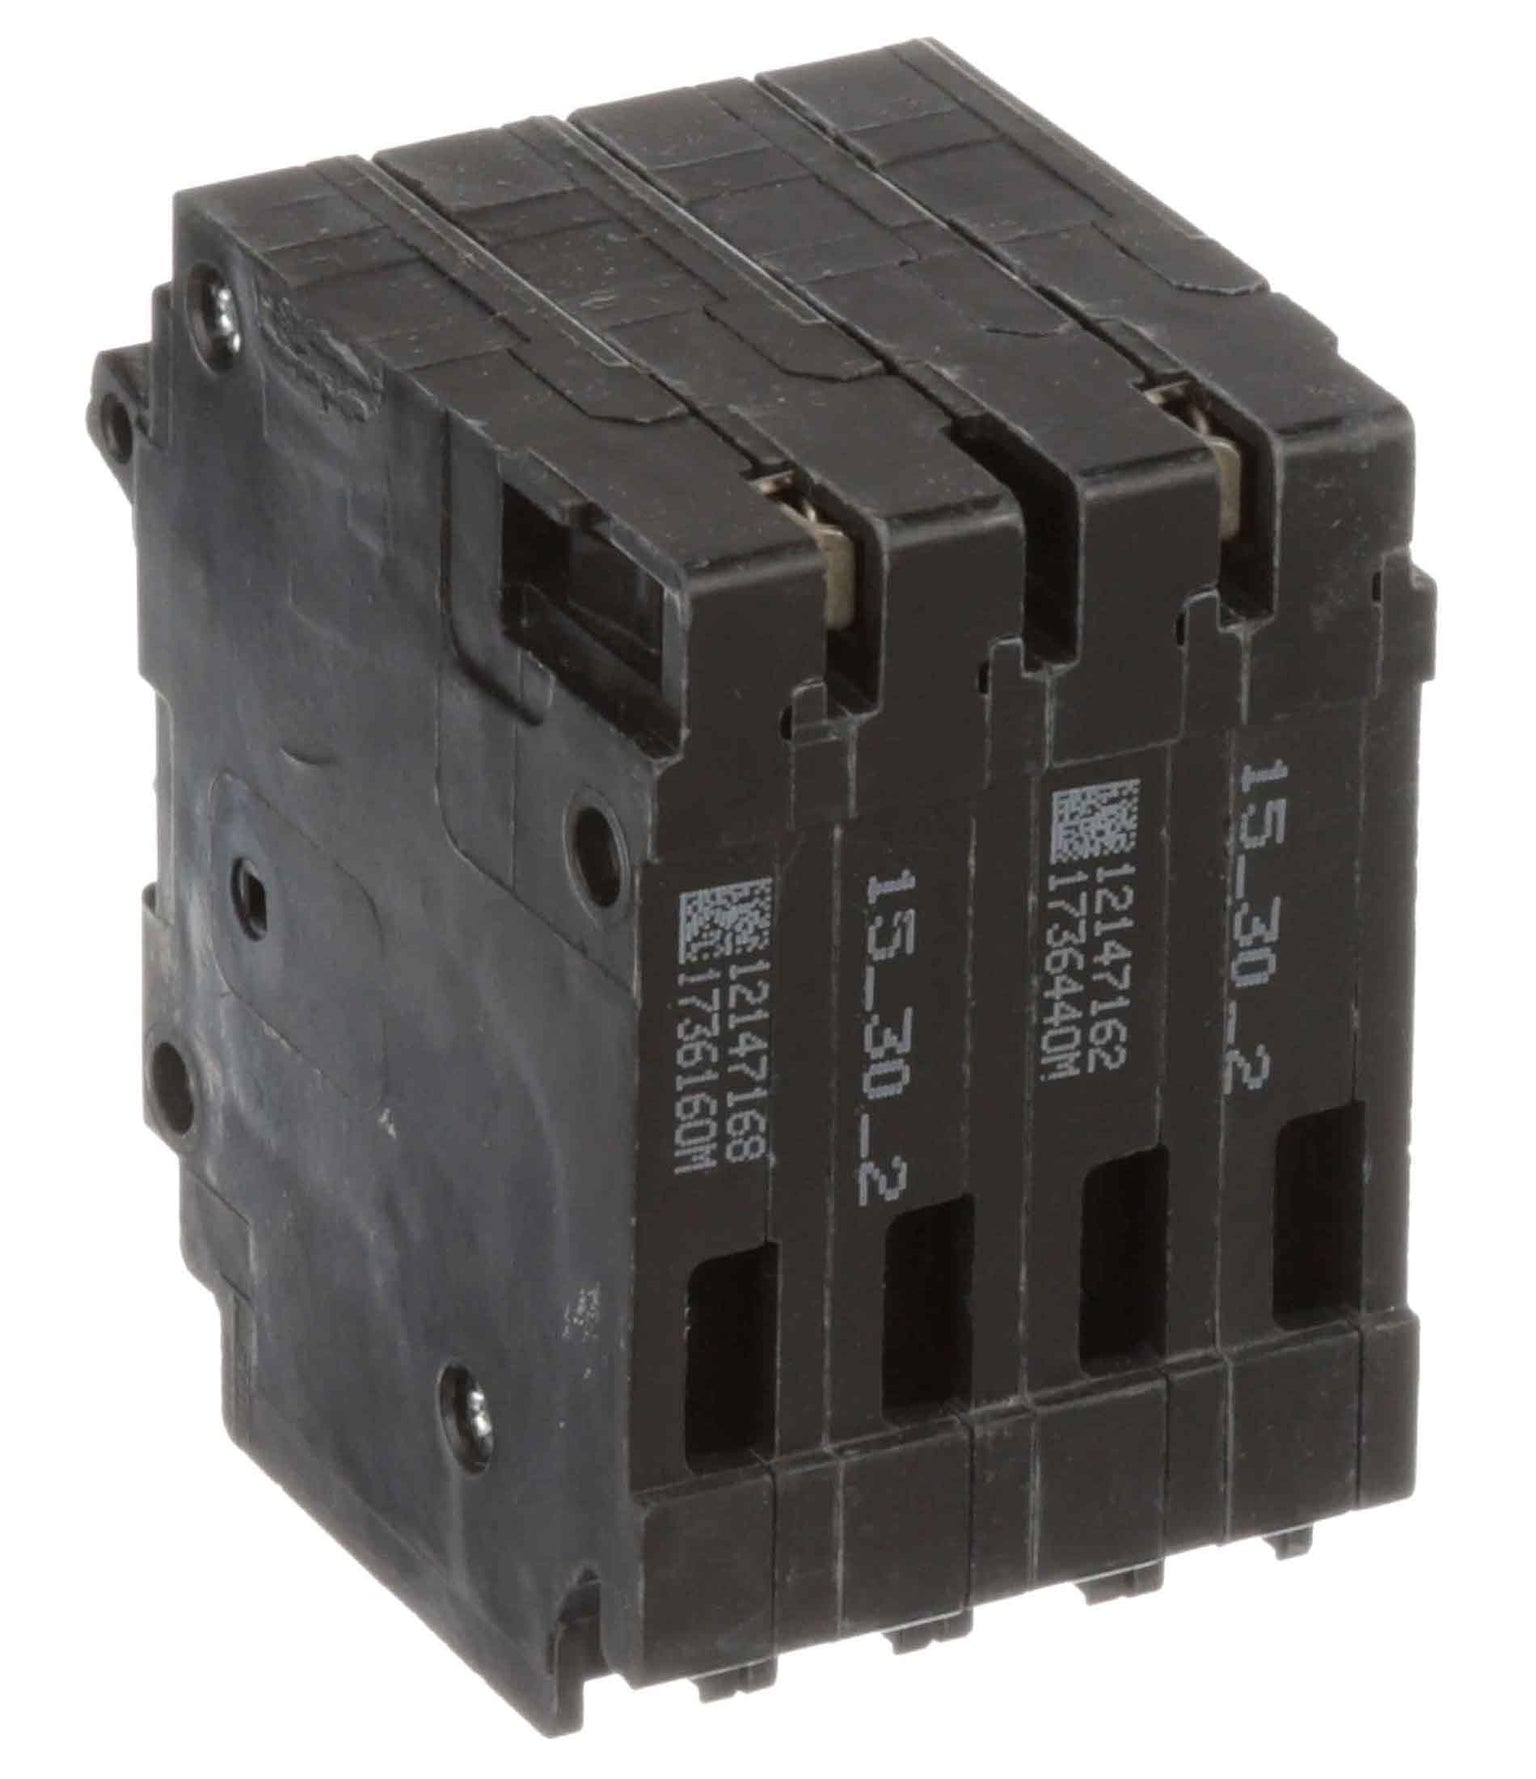 Q21530CT2 - Siemens - 30 Amp Molded Case Circuit Breaker